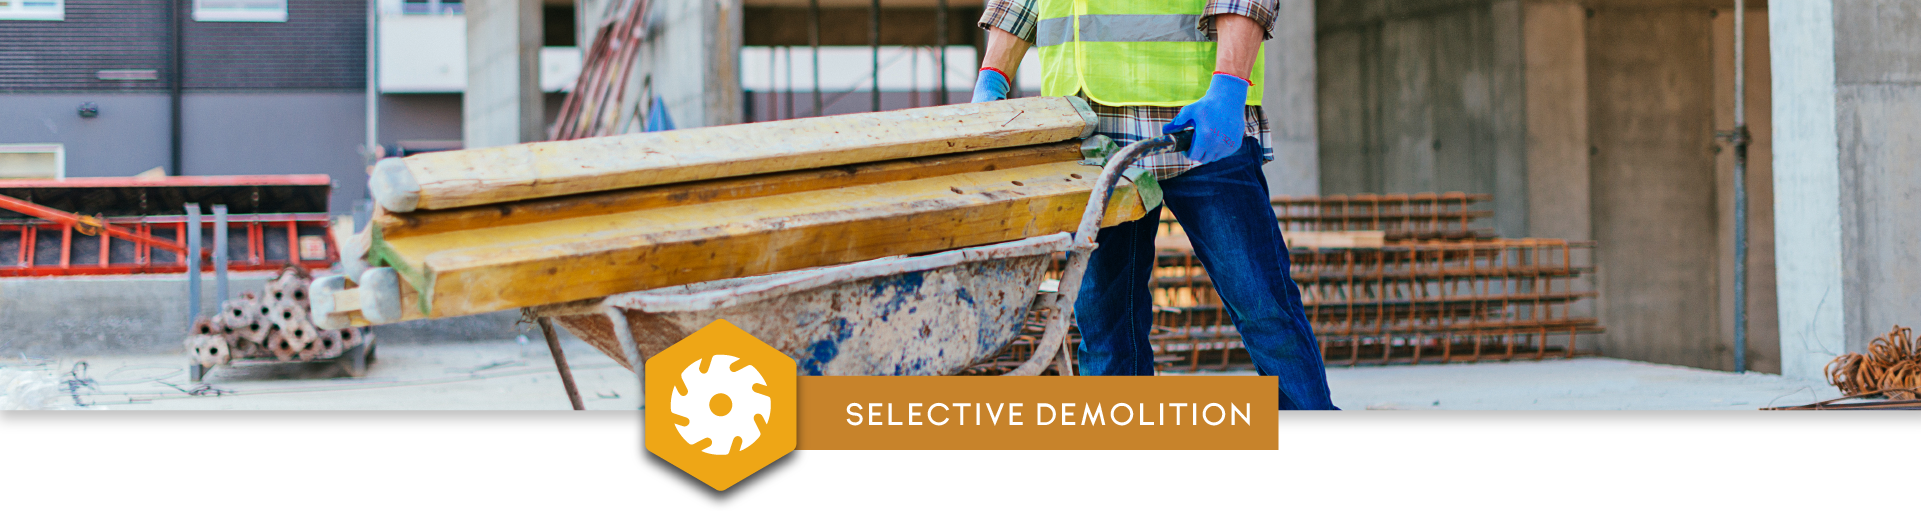 selective demolition services